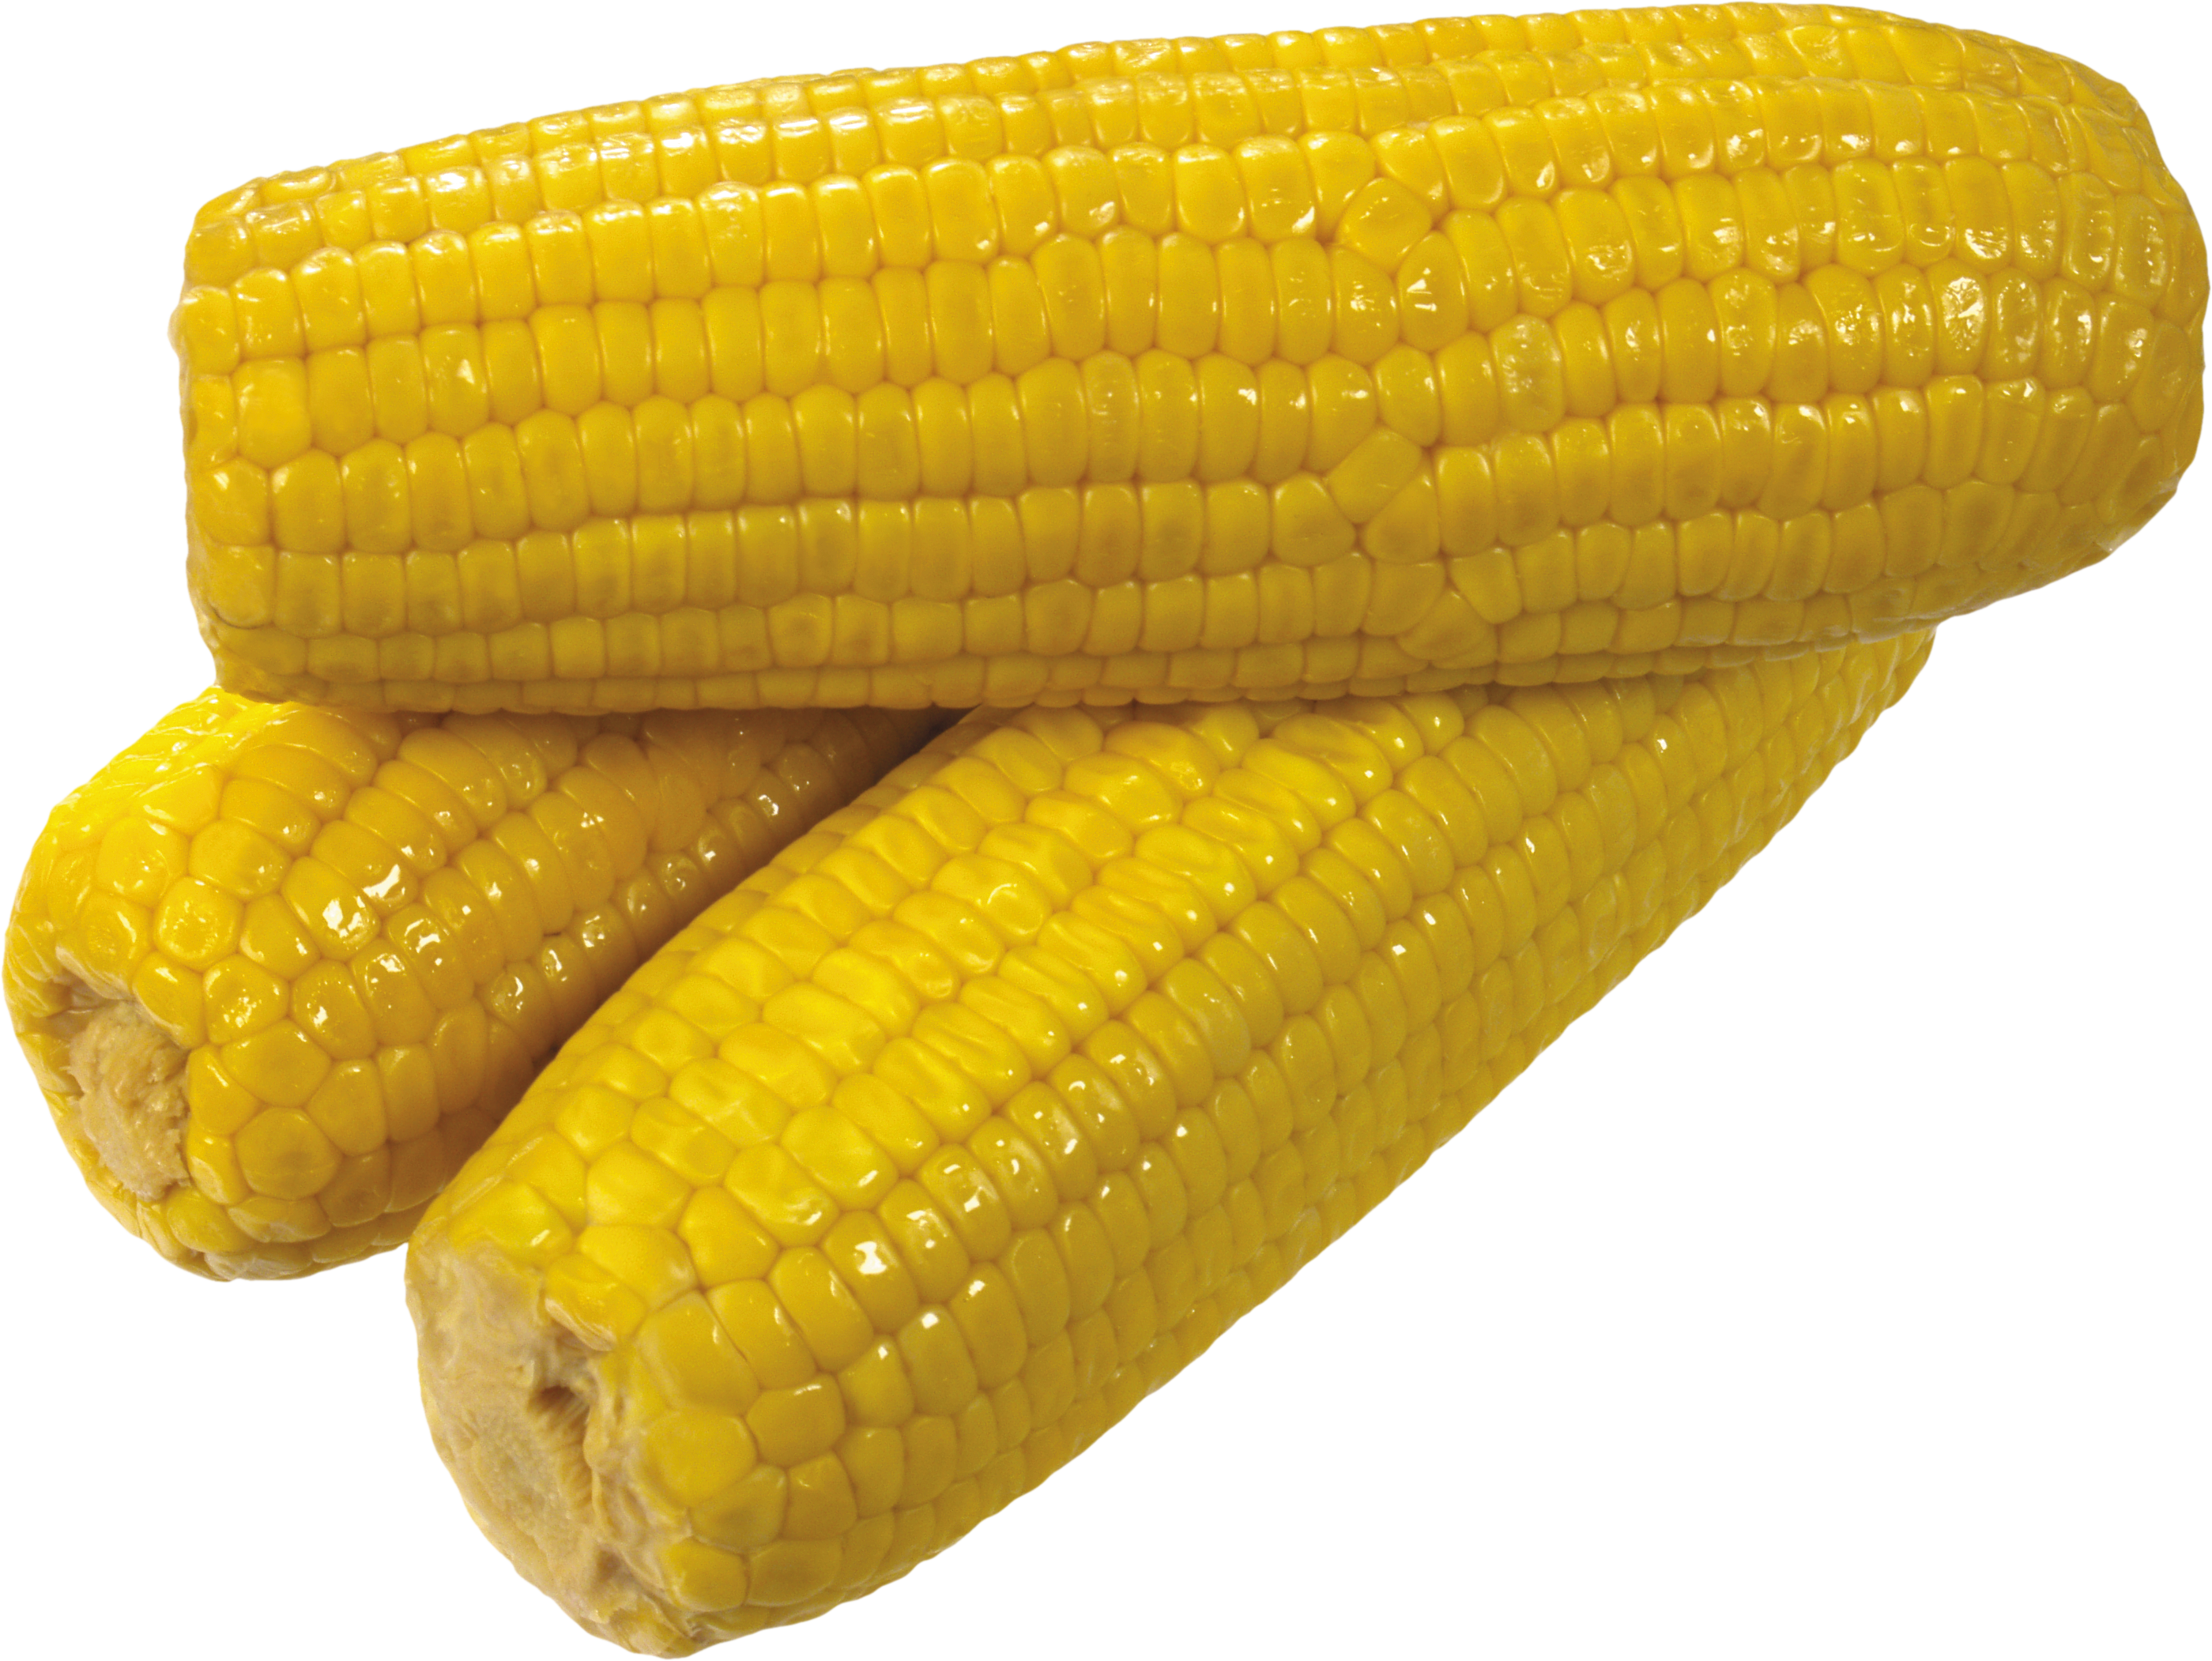 corn clipart farm food